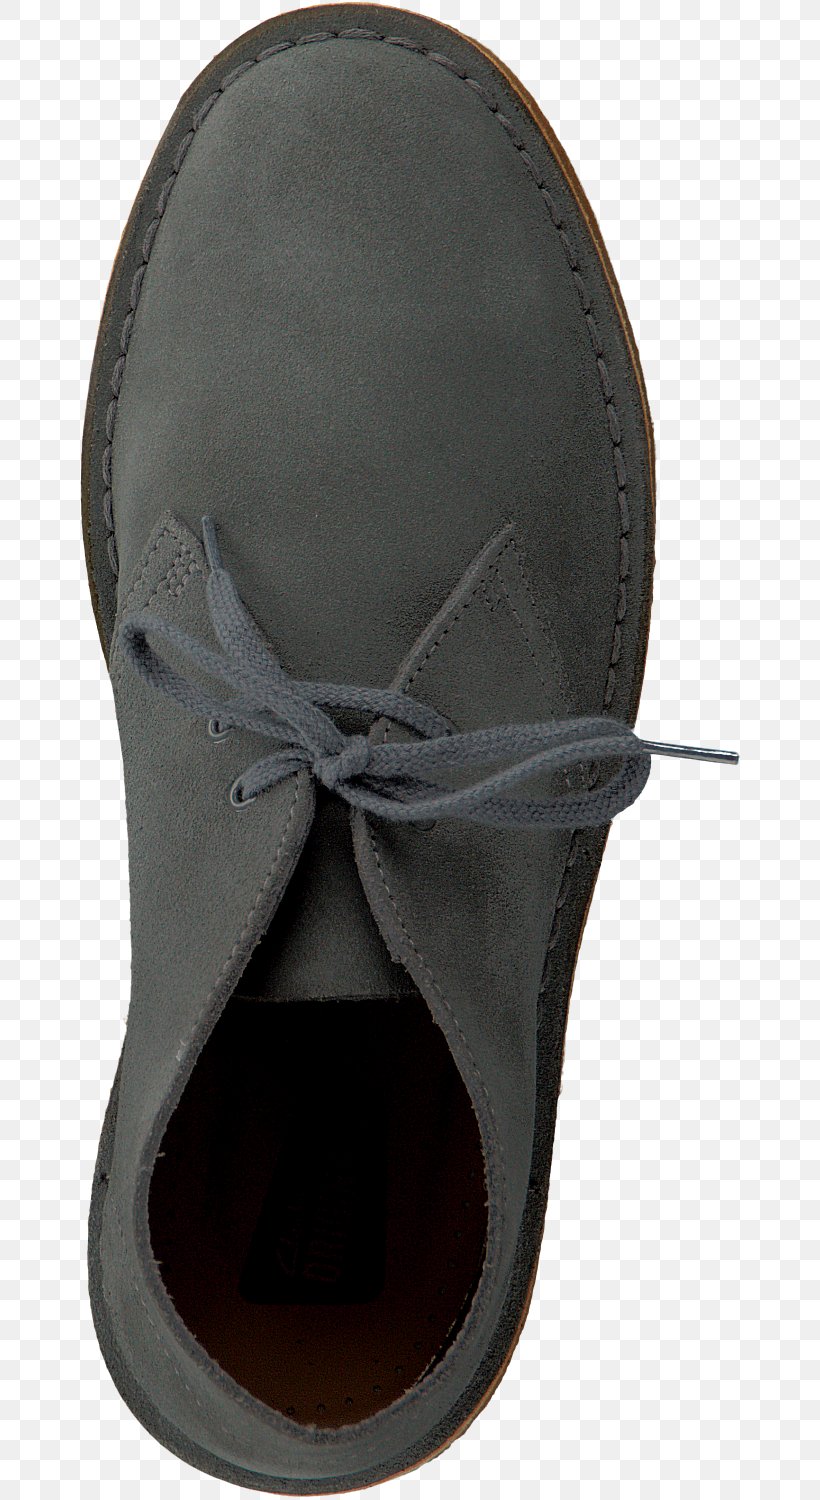 clarks shoes chukka boots